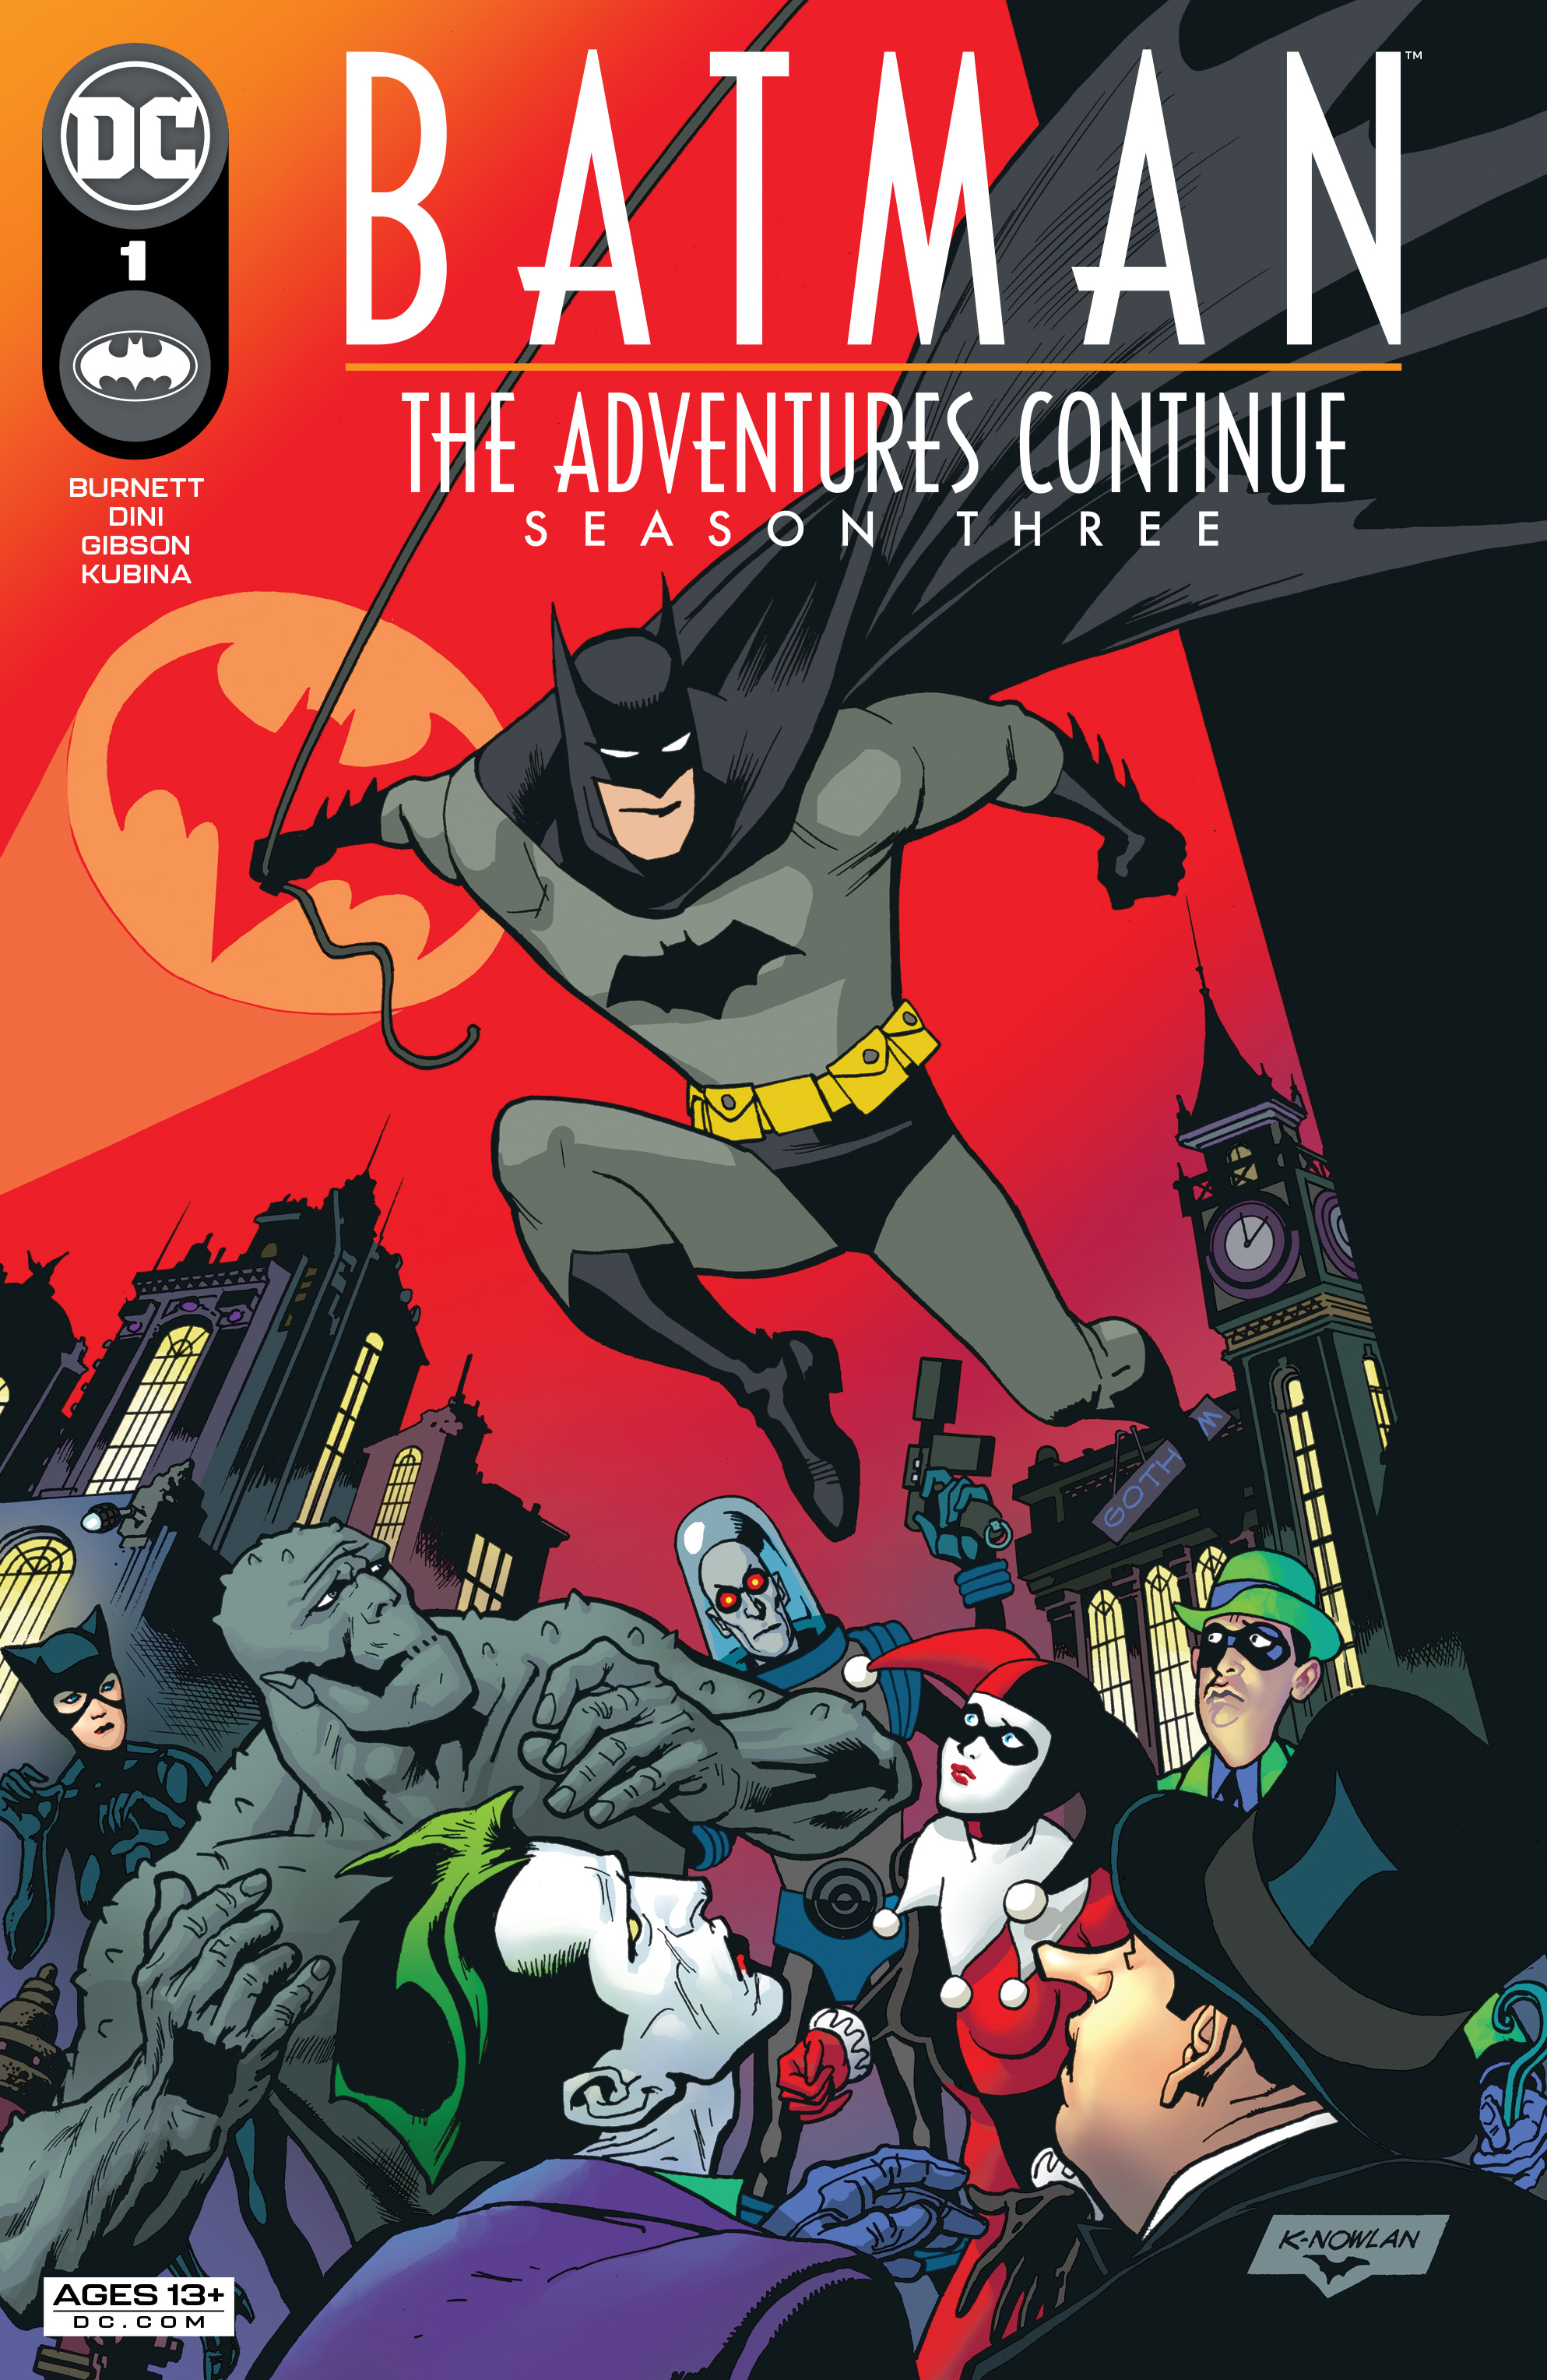 Batman: The Adventures Continue Season 3 #1 review | Batman News